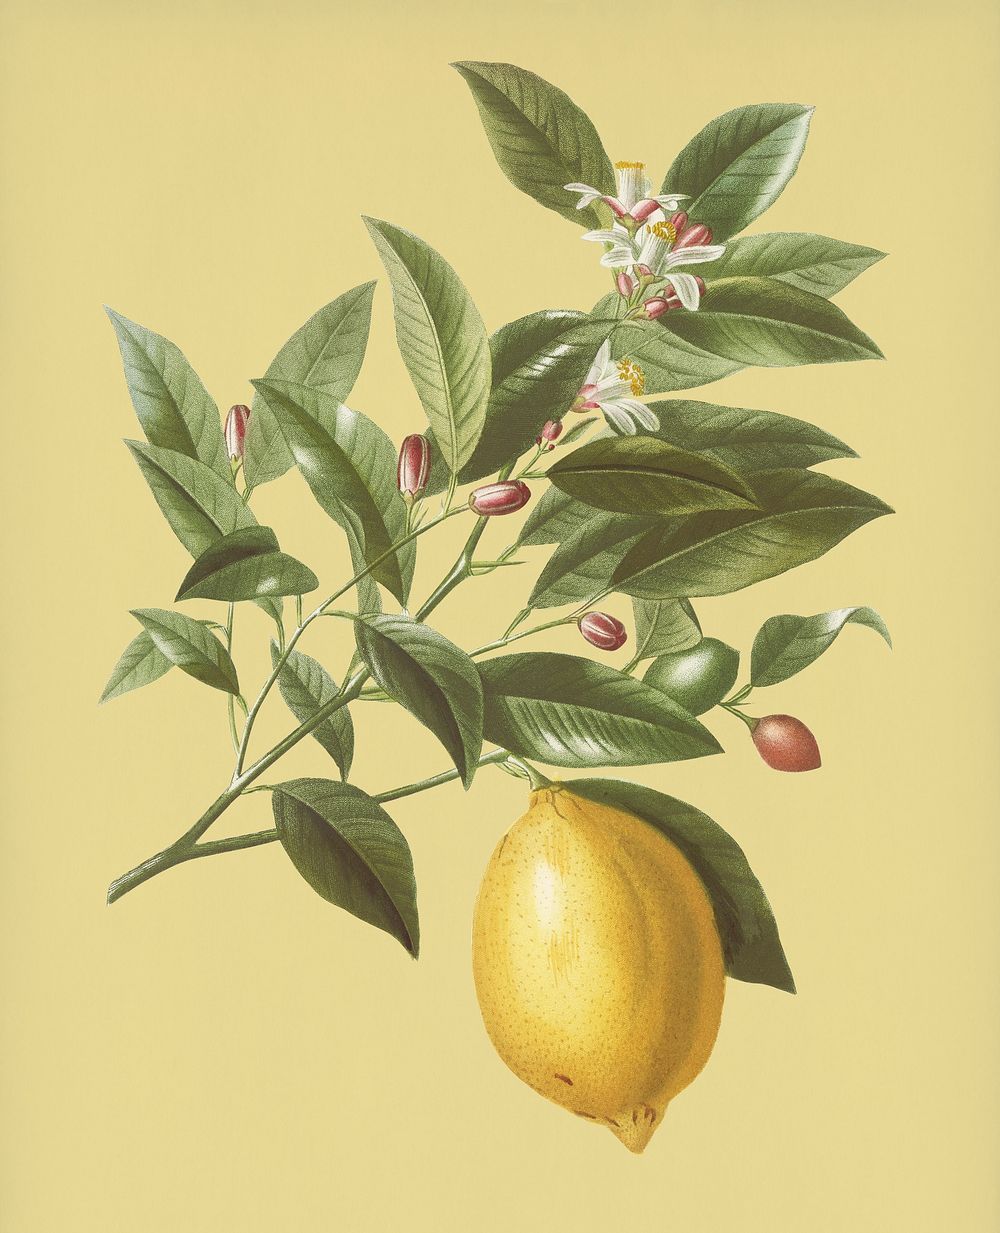 Vintage Illustration of Lemon.